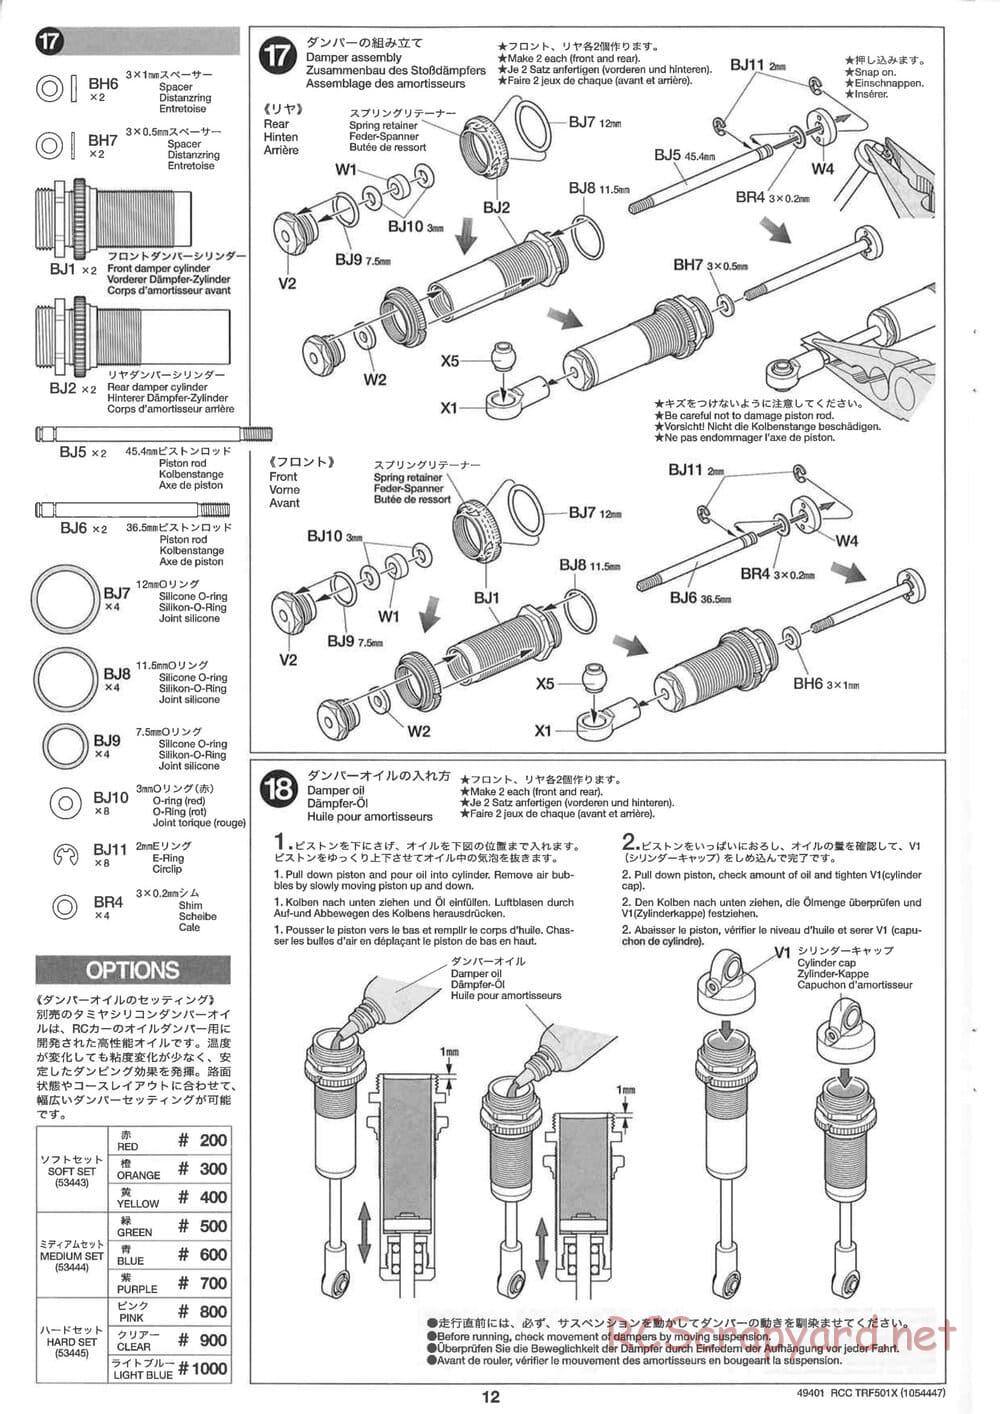 Tamiya - TRF501X Chassis - Manual - Page 12